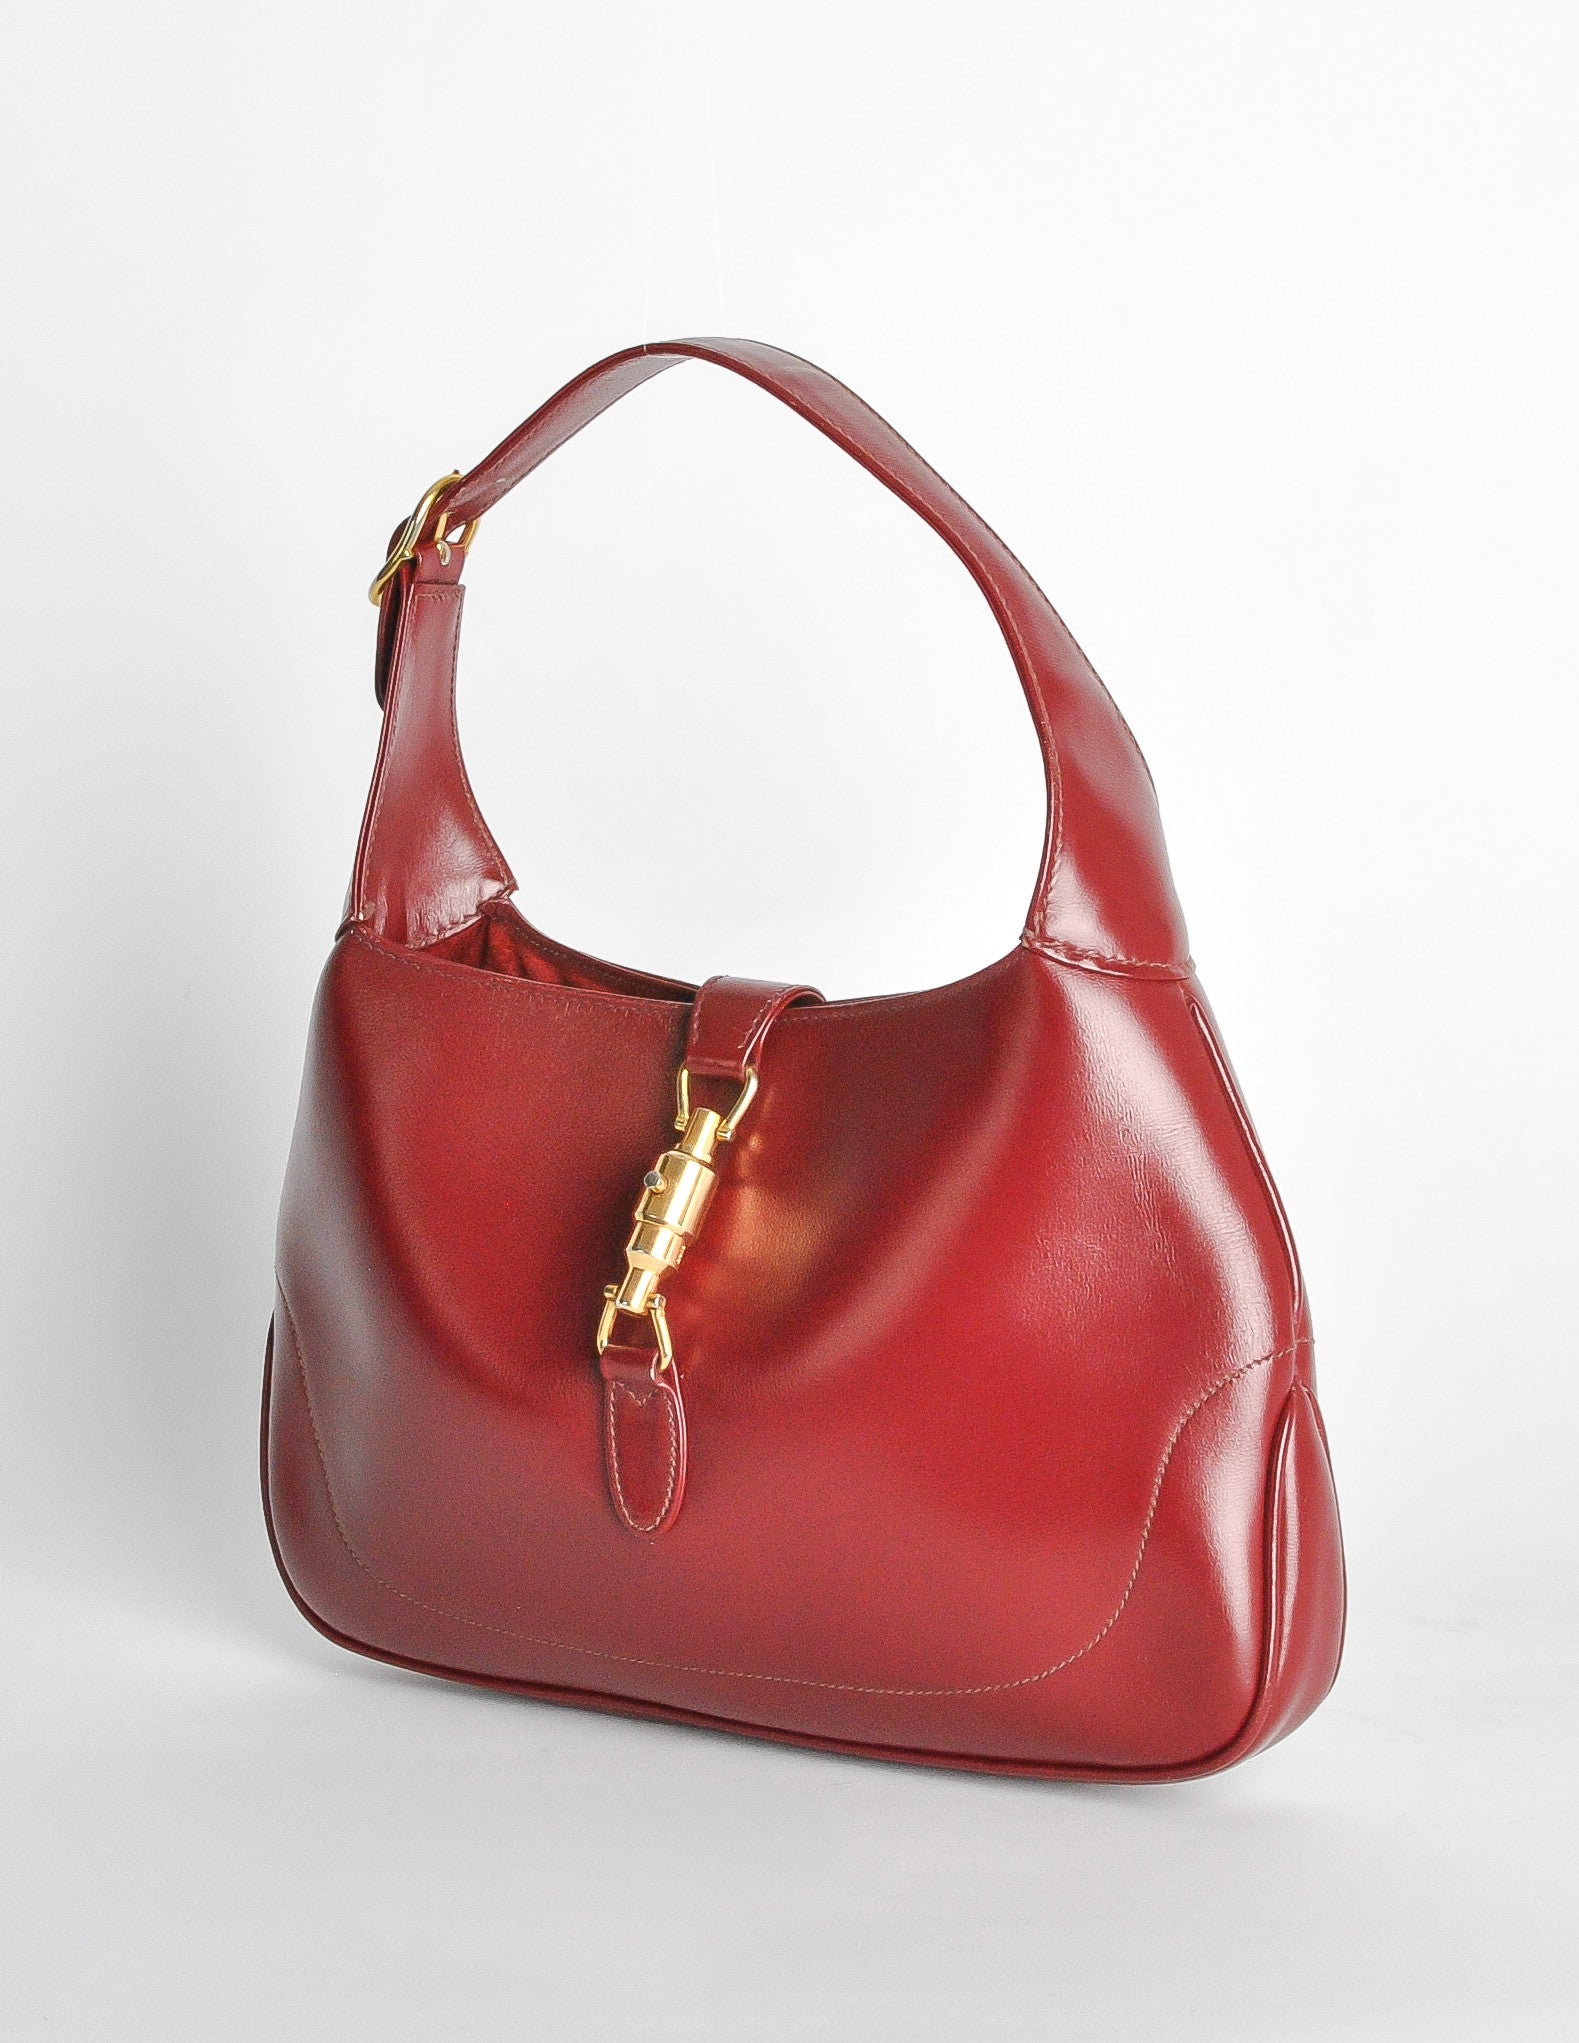 Gucci Vintage 1960s Maroon Jackie O Handbag - from Amarcord Vintage Fashion